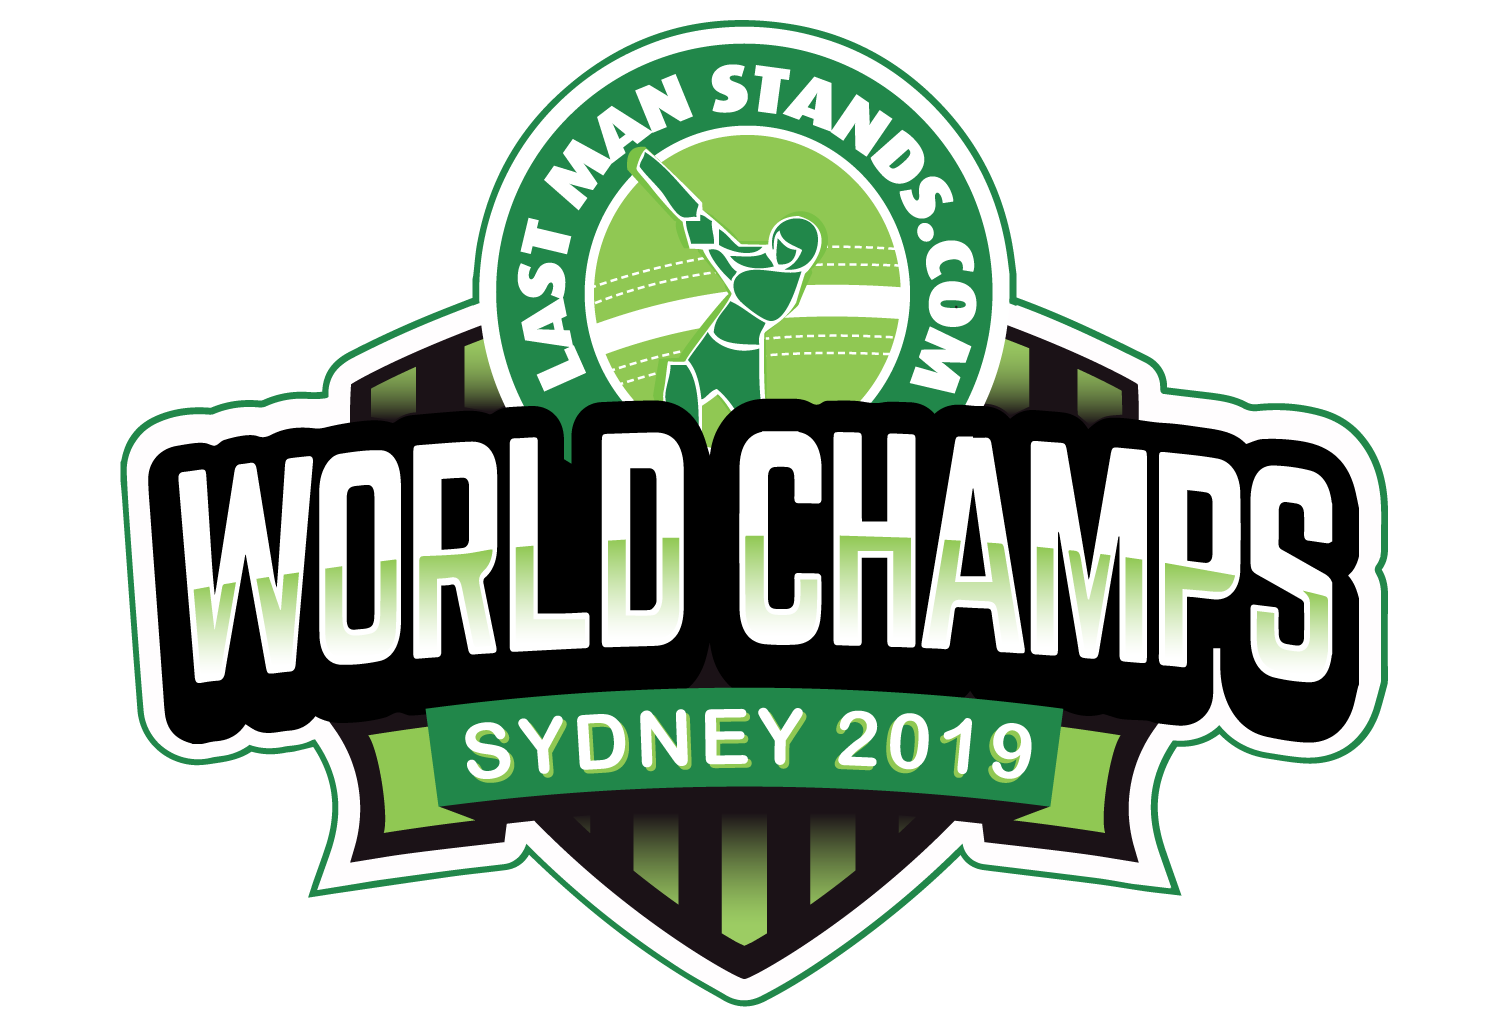 Last Man Stands World CHamps 2019 Sydney Logo